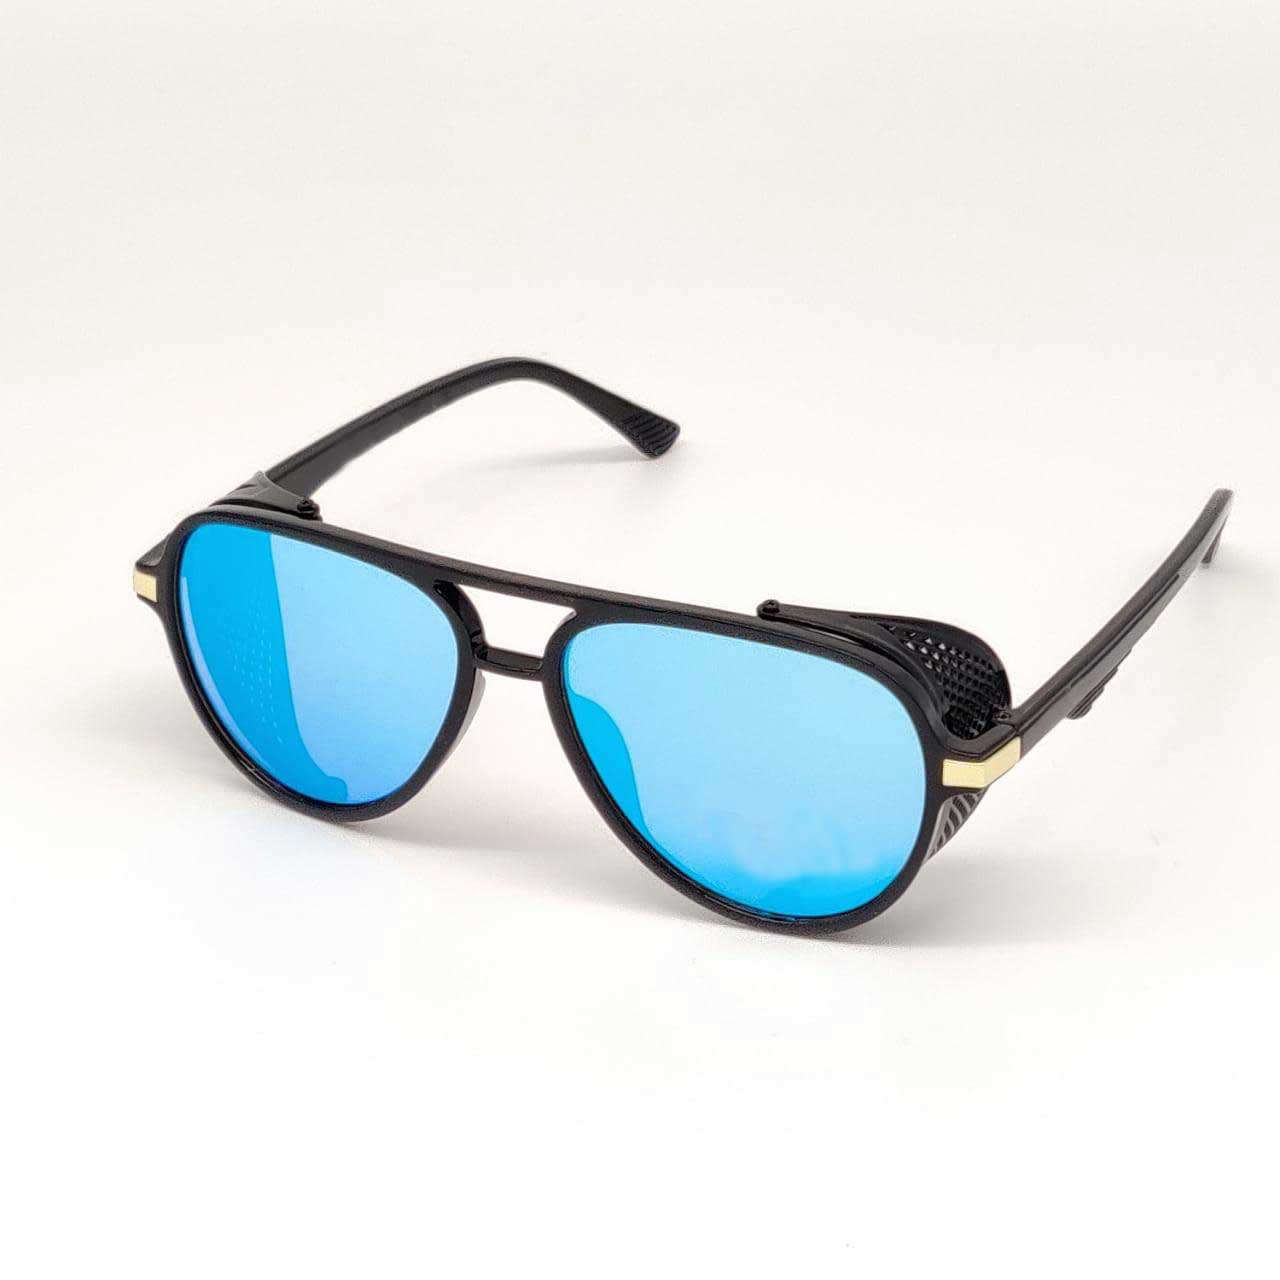 Trendy Cap Aviator Sunglasses For Men And Women-Unique and Classy